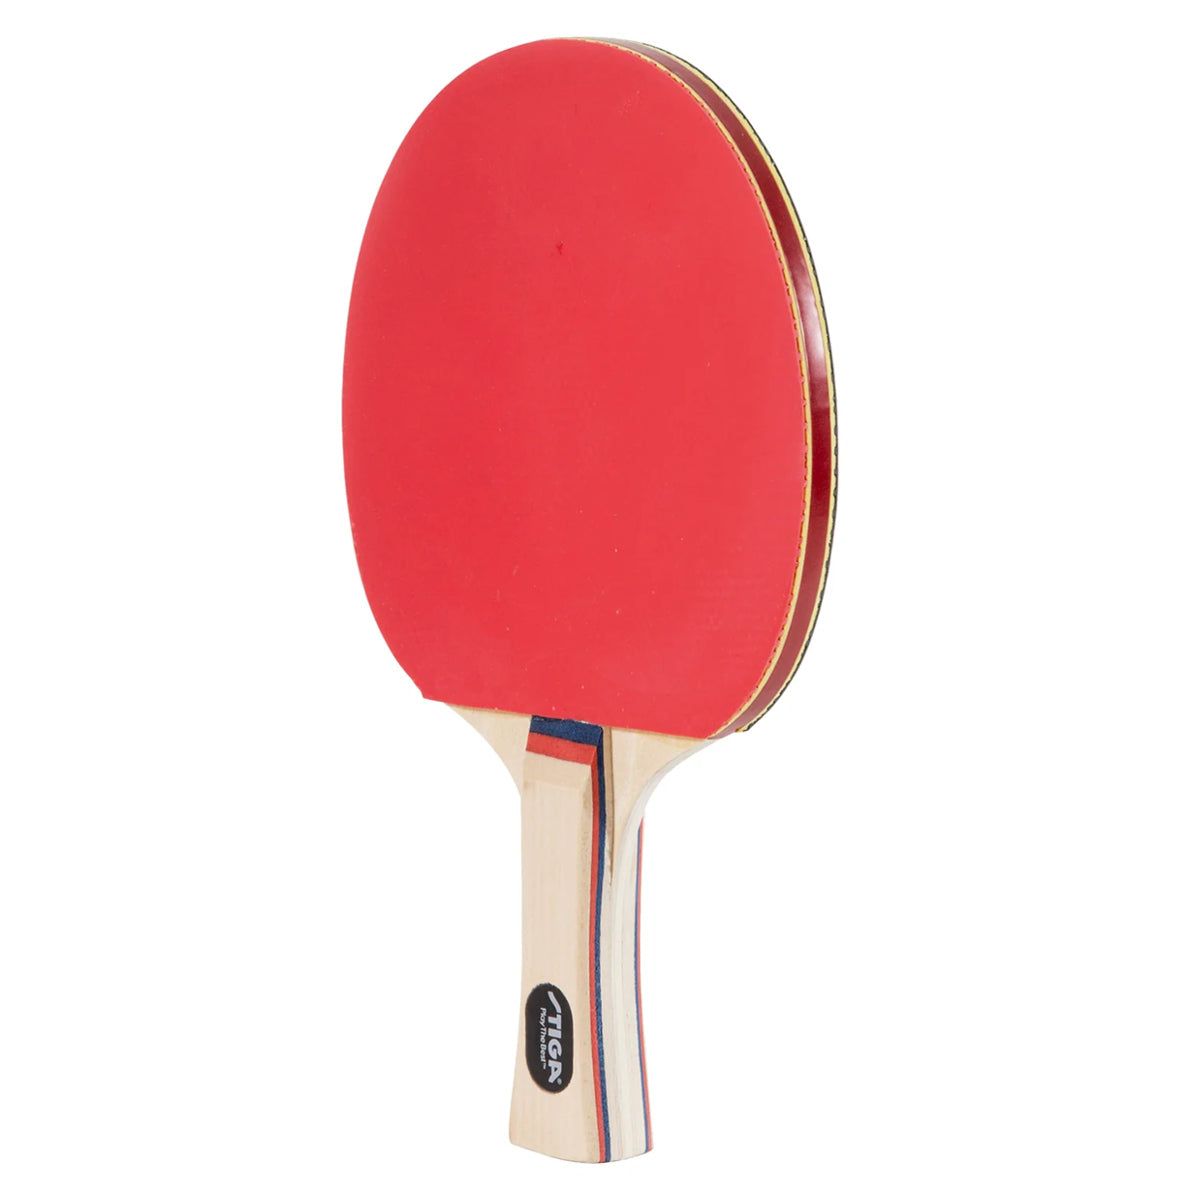 STIGA Aspire Table Tennis Racket